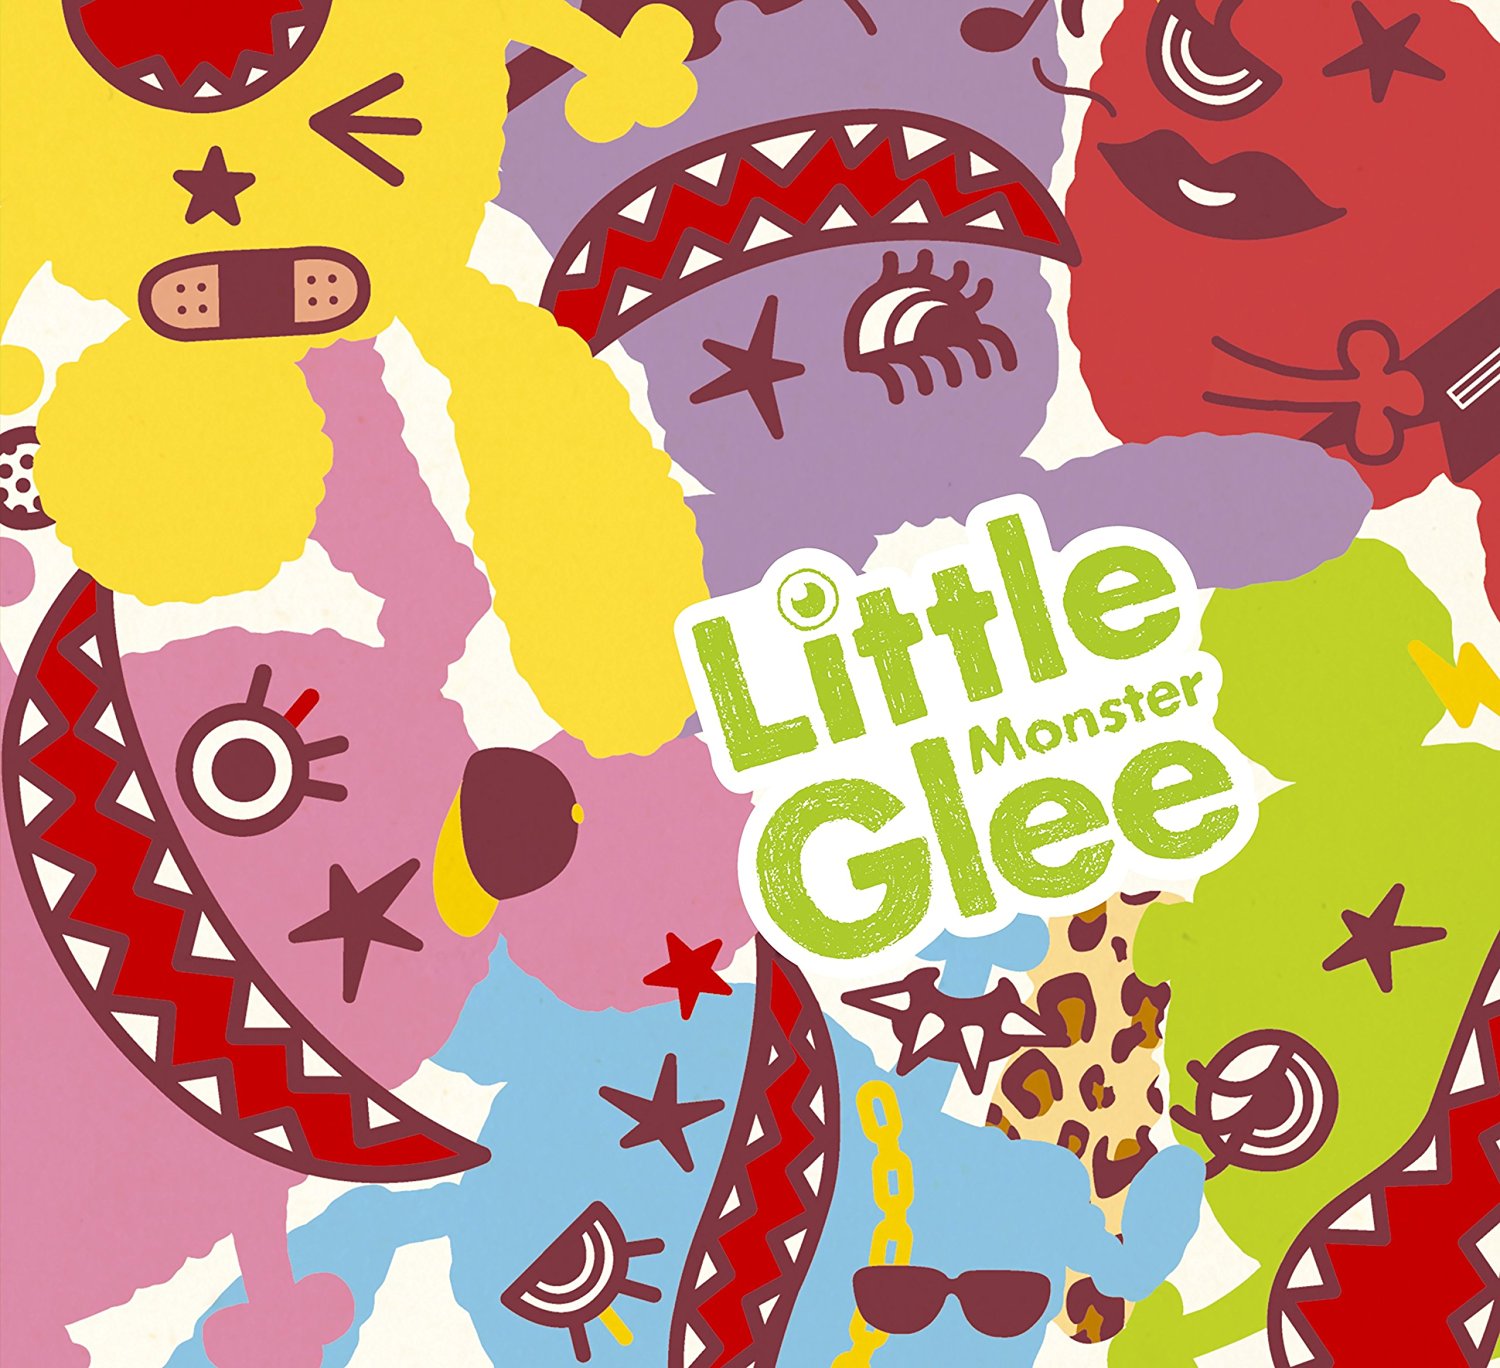 Fan S Voice Little Glee Monster Presents ガオフェス16 リトグリサマーキャンプ Di Ga Online ライブ コンサートチケット先行 Disk Garage ディスクガレージ